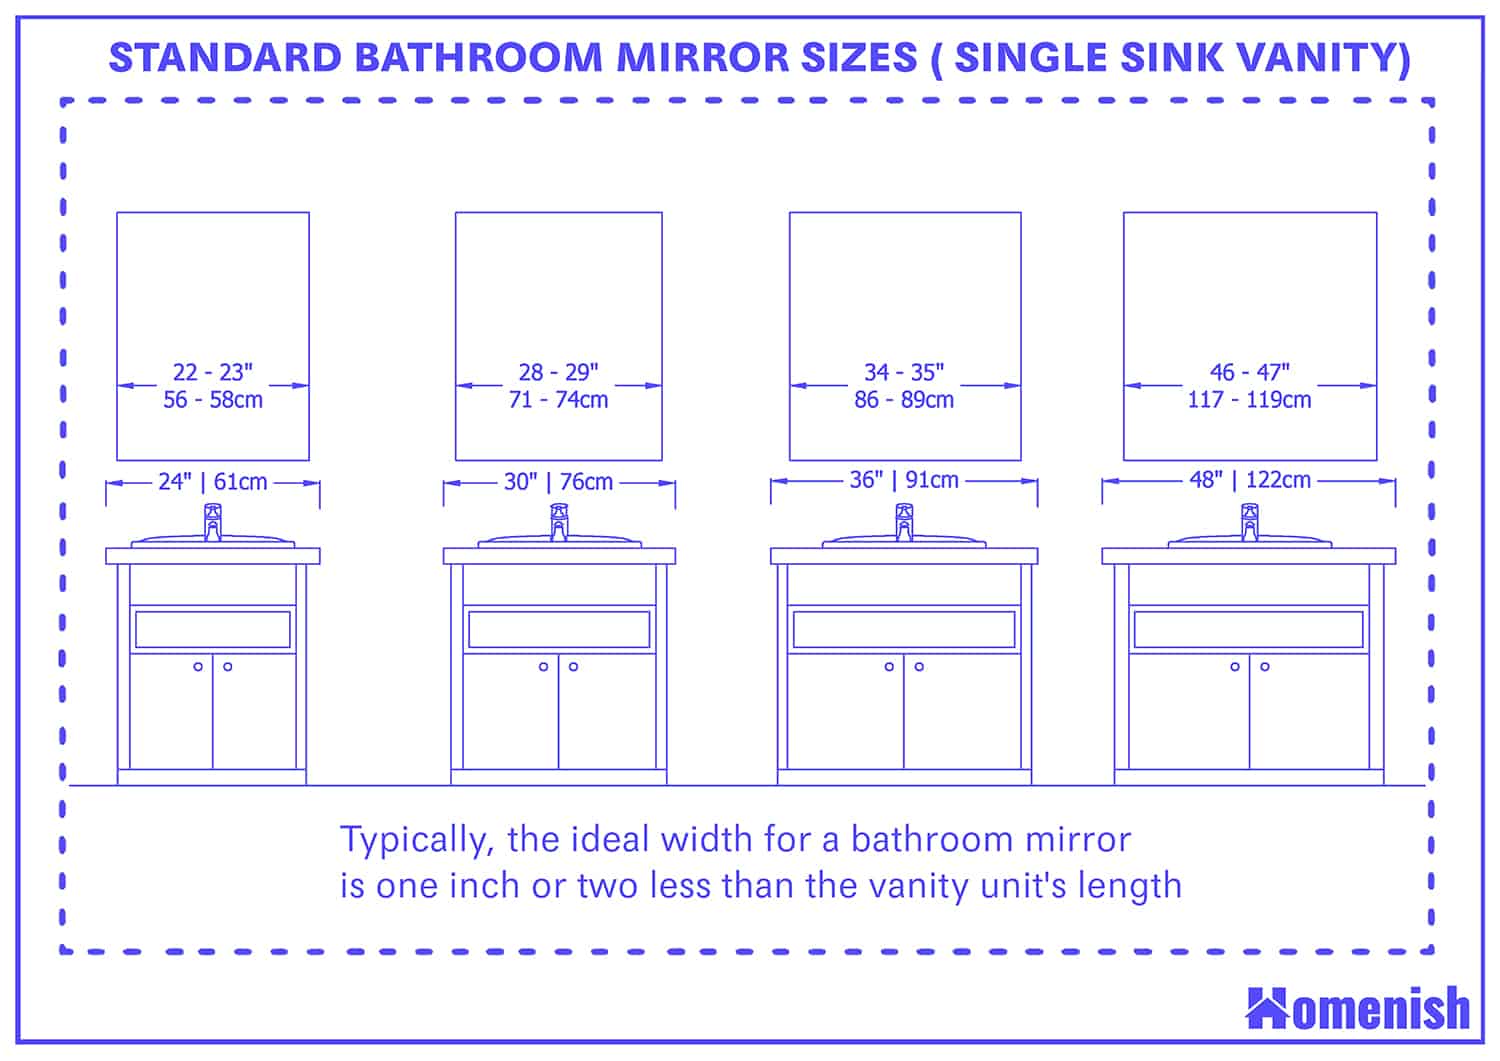 Standard Bathroom Mirror Sizes For Single Sink Vanity